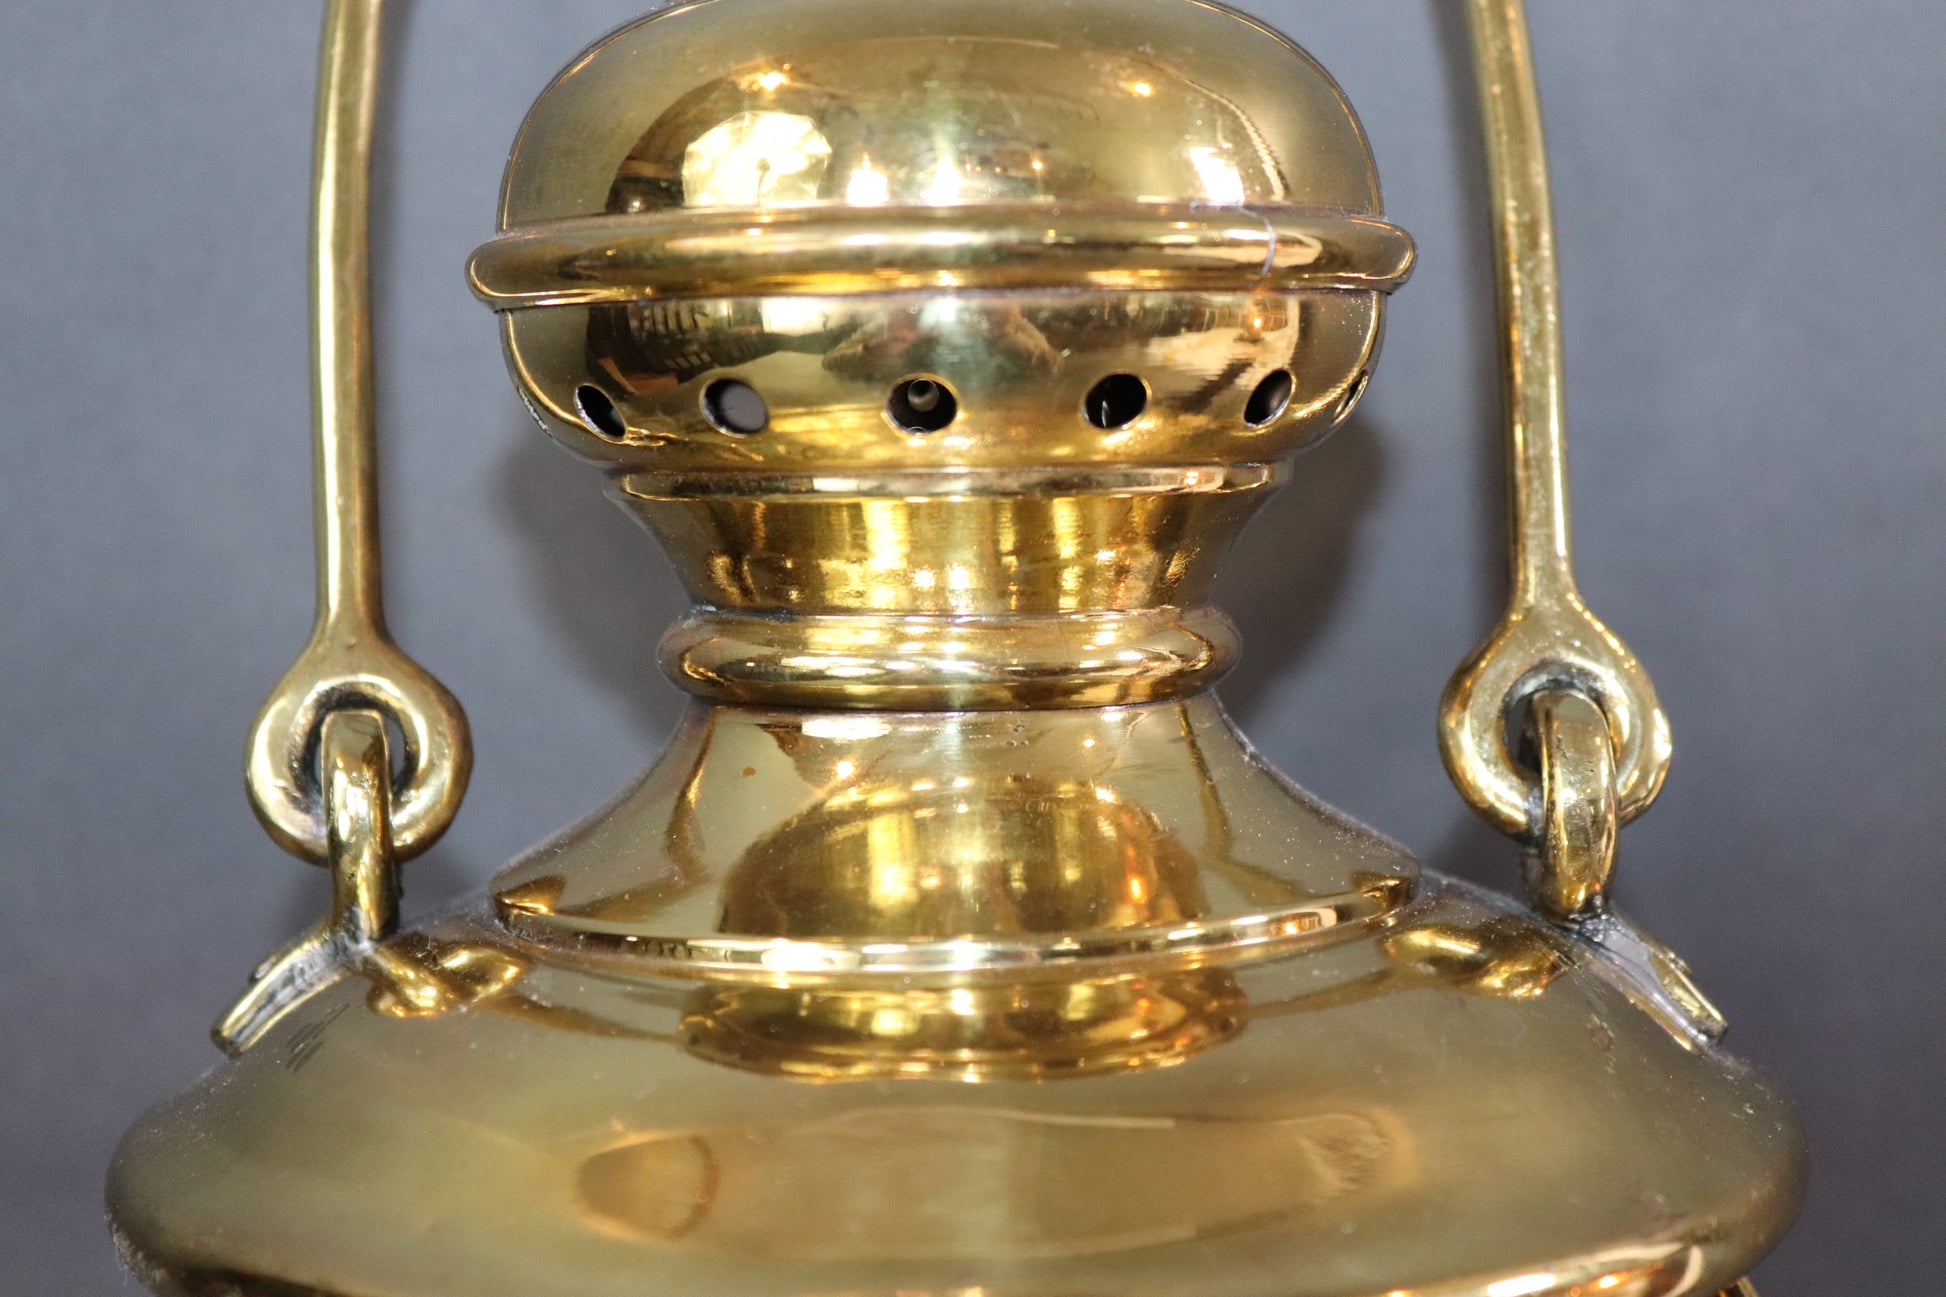 Circa 1850's American Maritime Ship Brass Candle Lantern - Ruby Lane